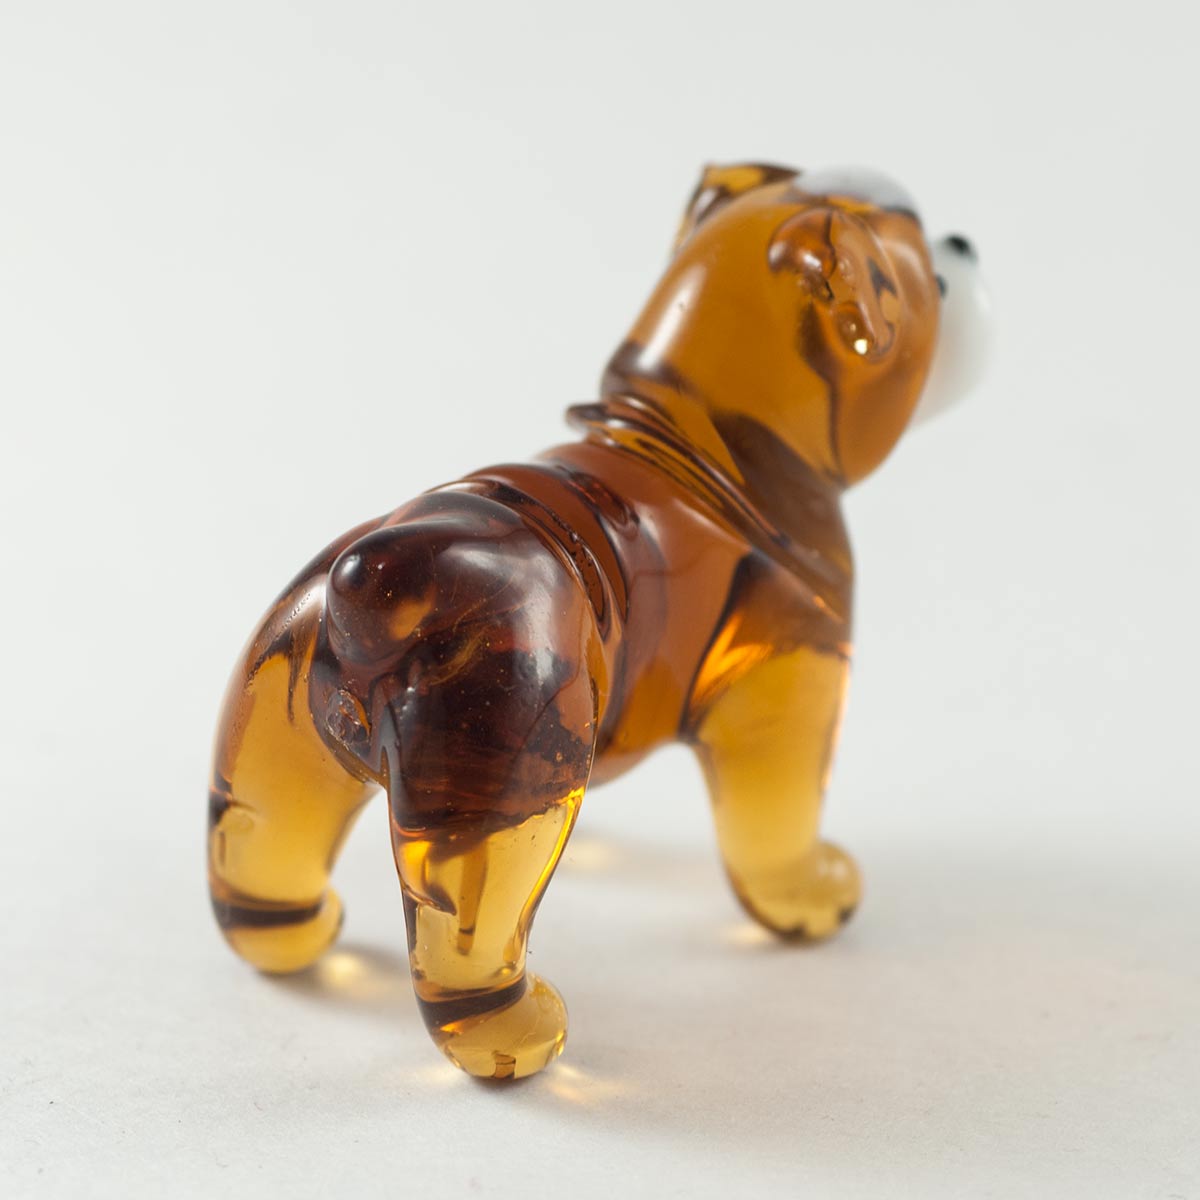 Bulldog Glass Figure in Glass Figurines Dogs category